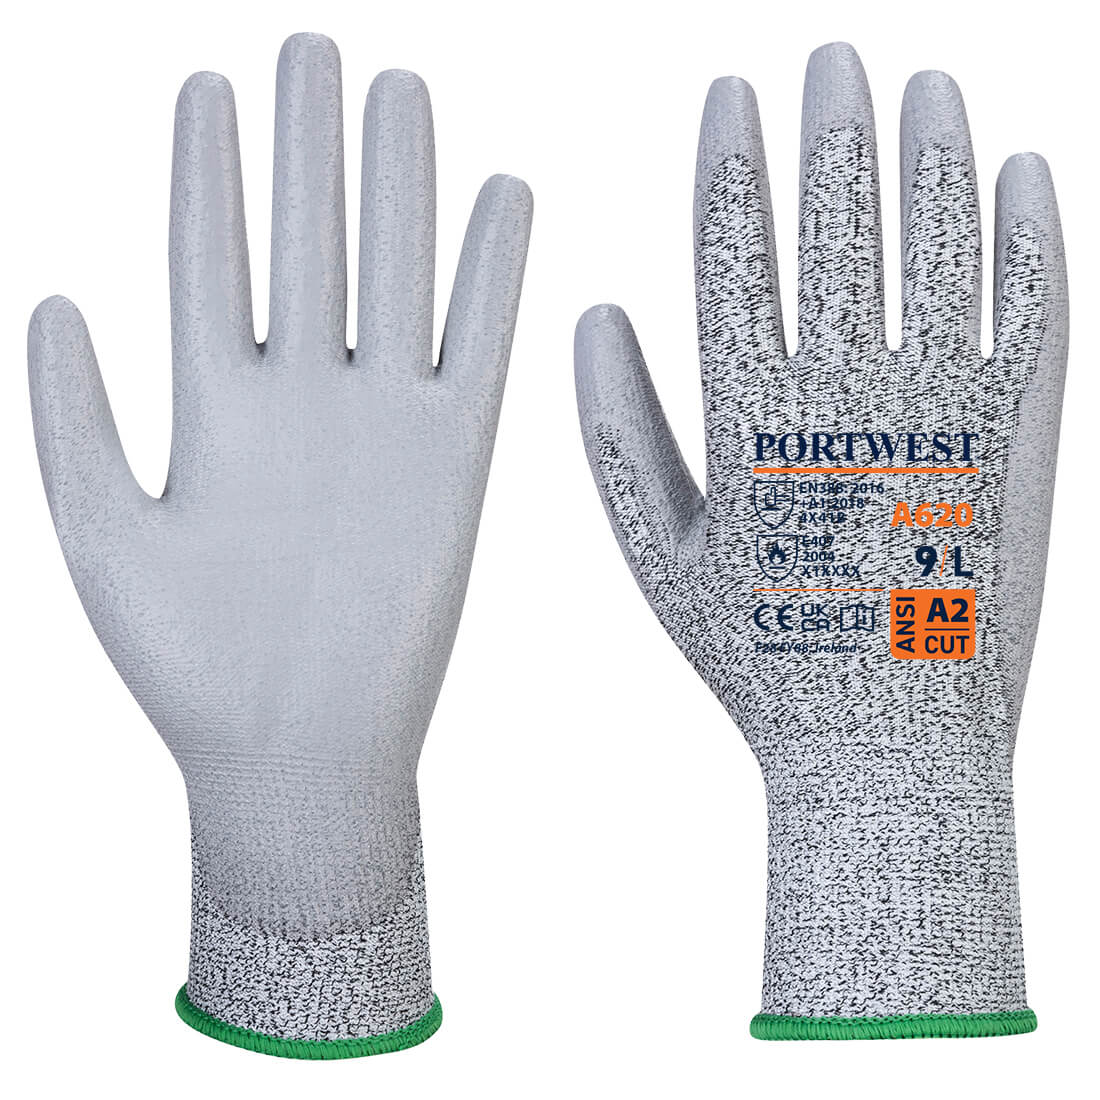 A625 Portwest® PU Coated LR Cut-Resistant Work Gloves